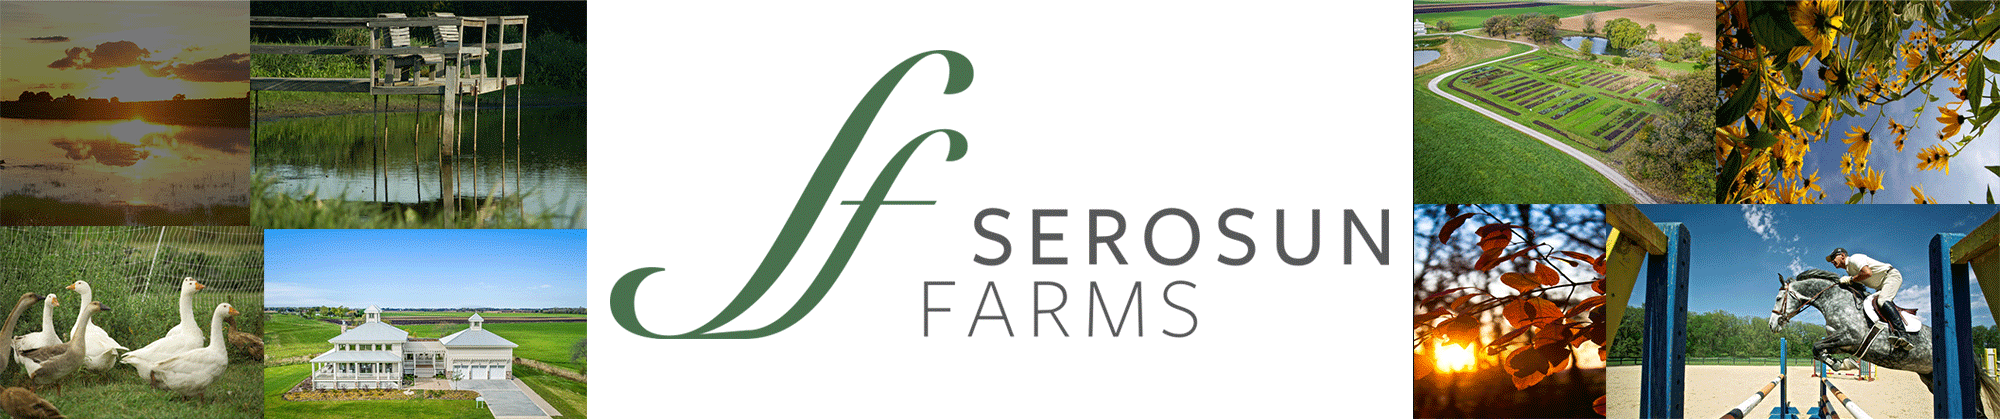 Serosun Farms Image Collage